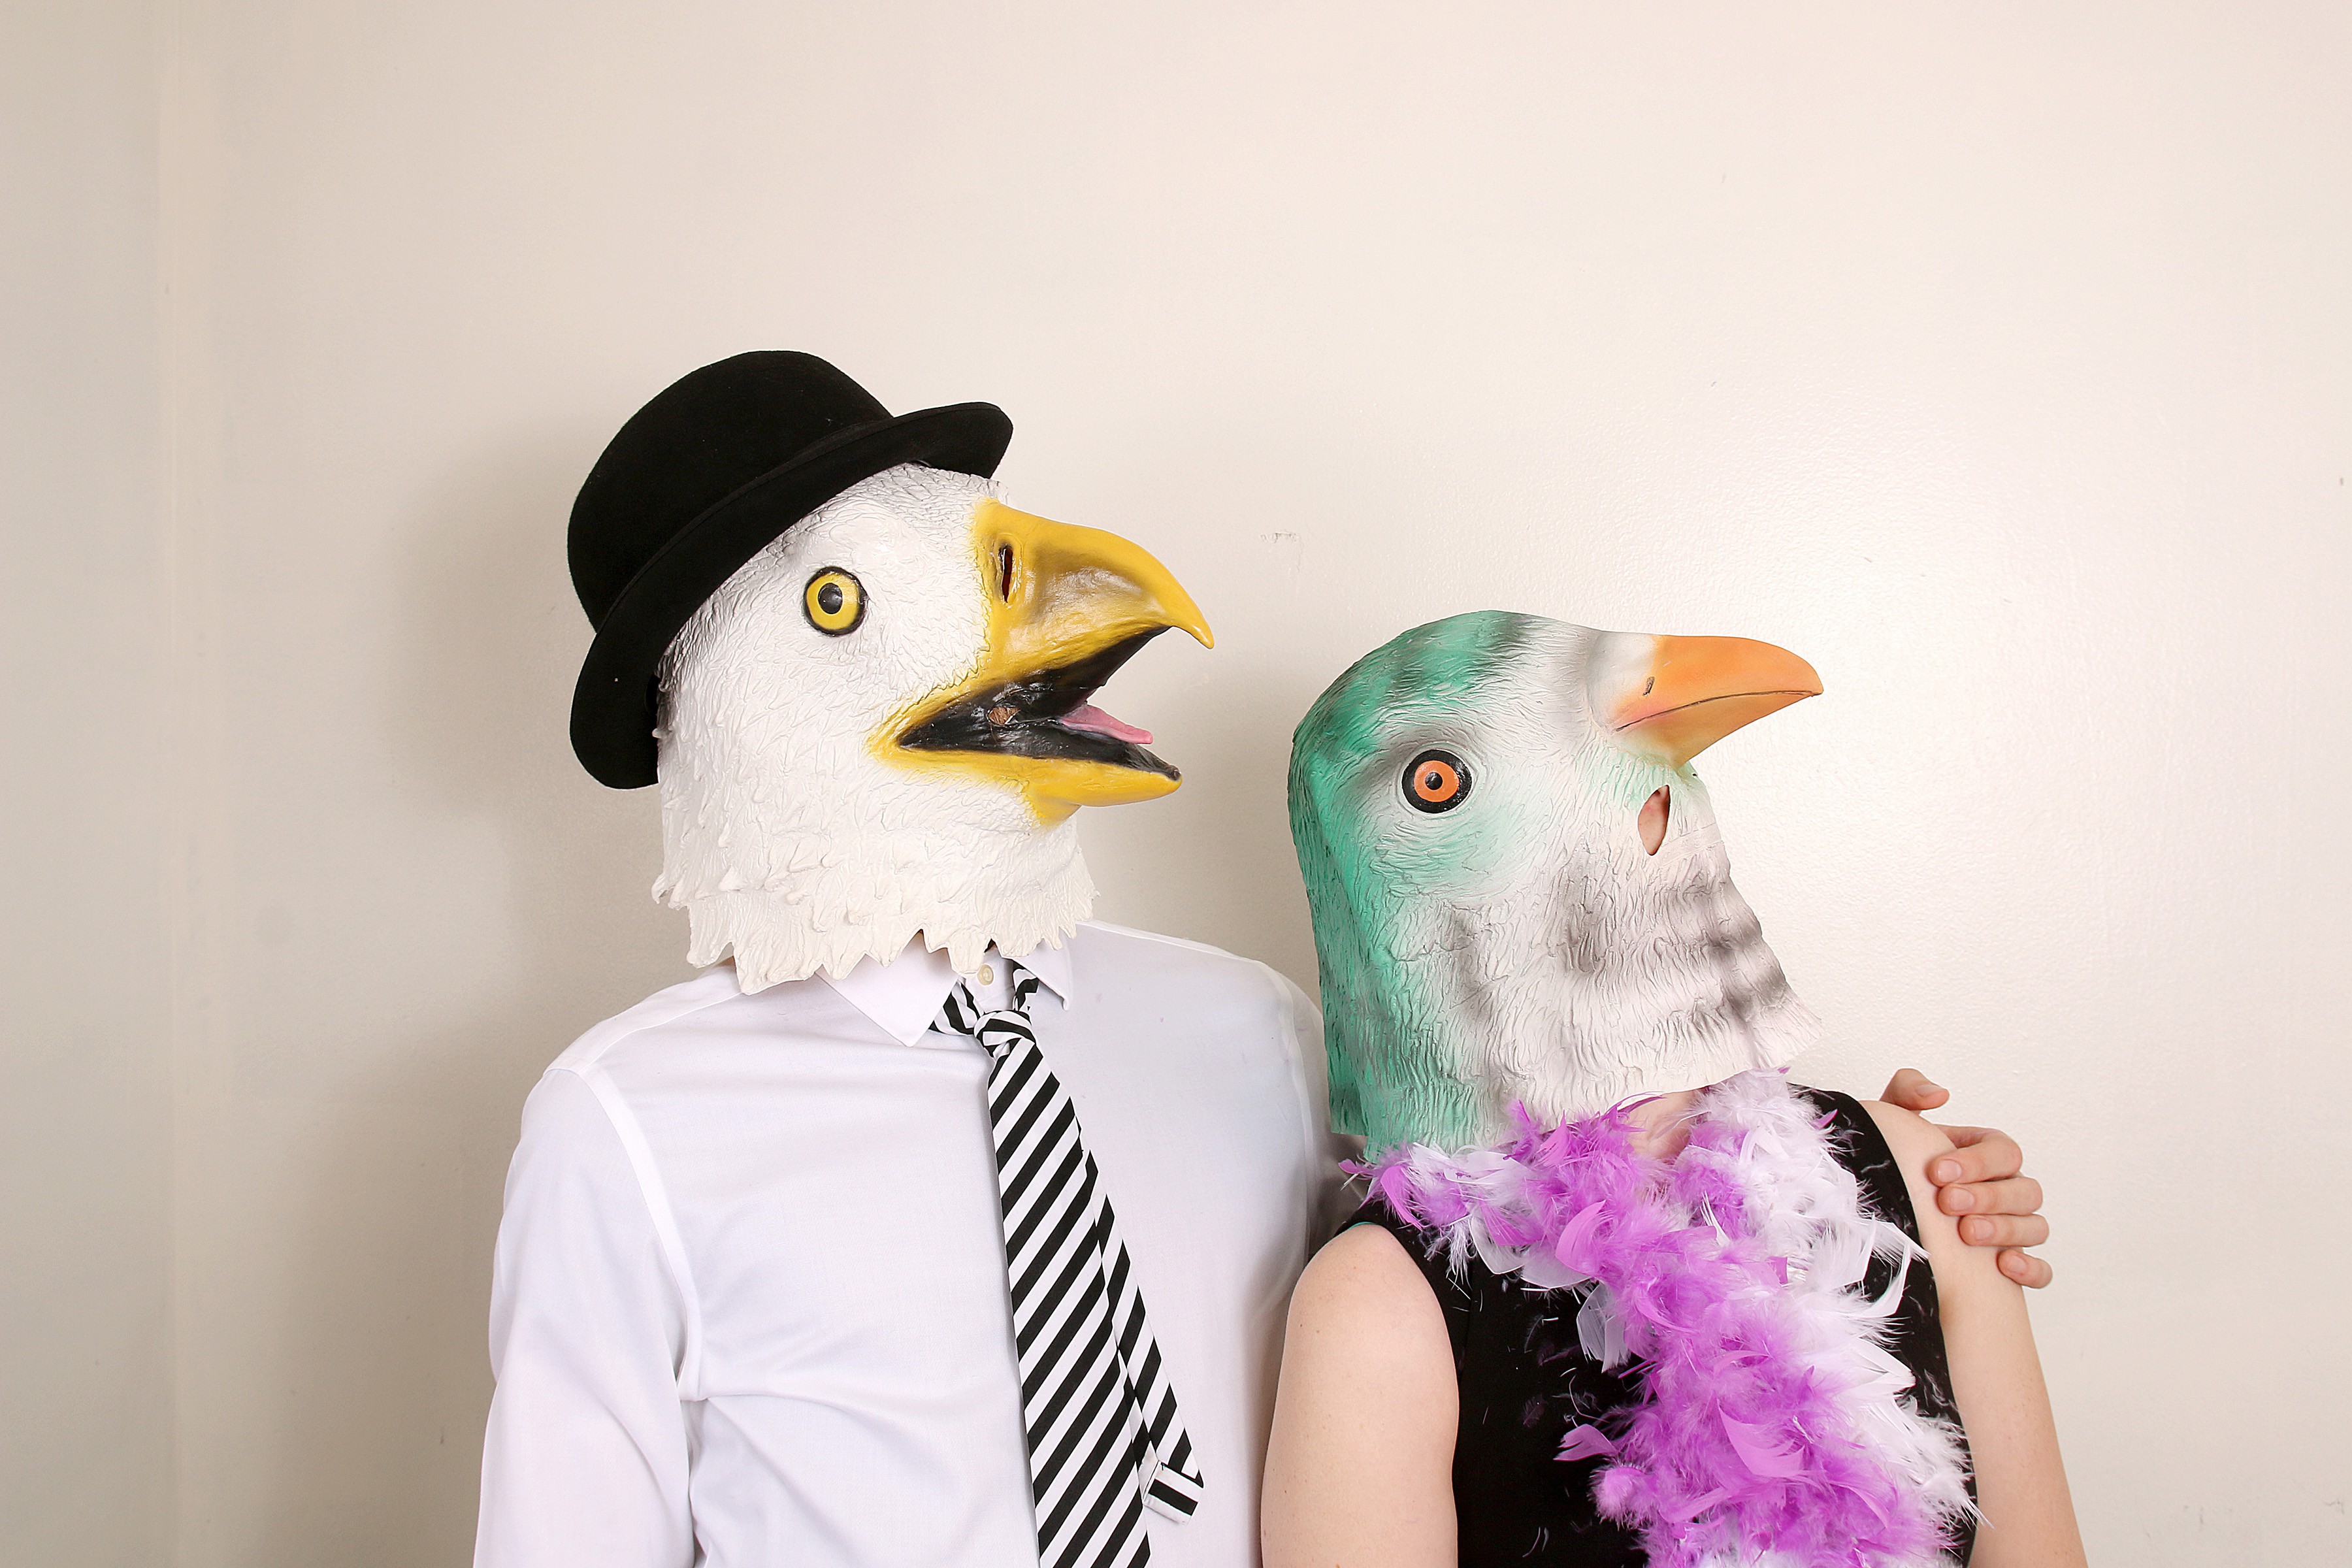 Classical Theatre Company's The Birds